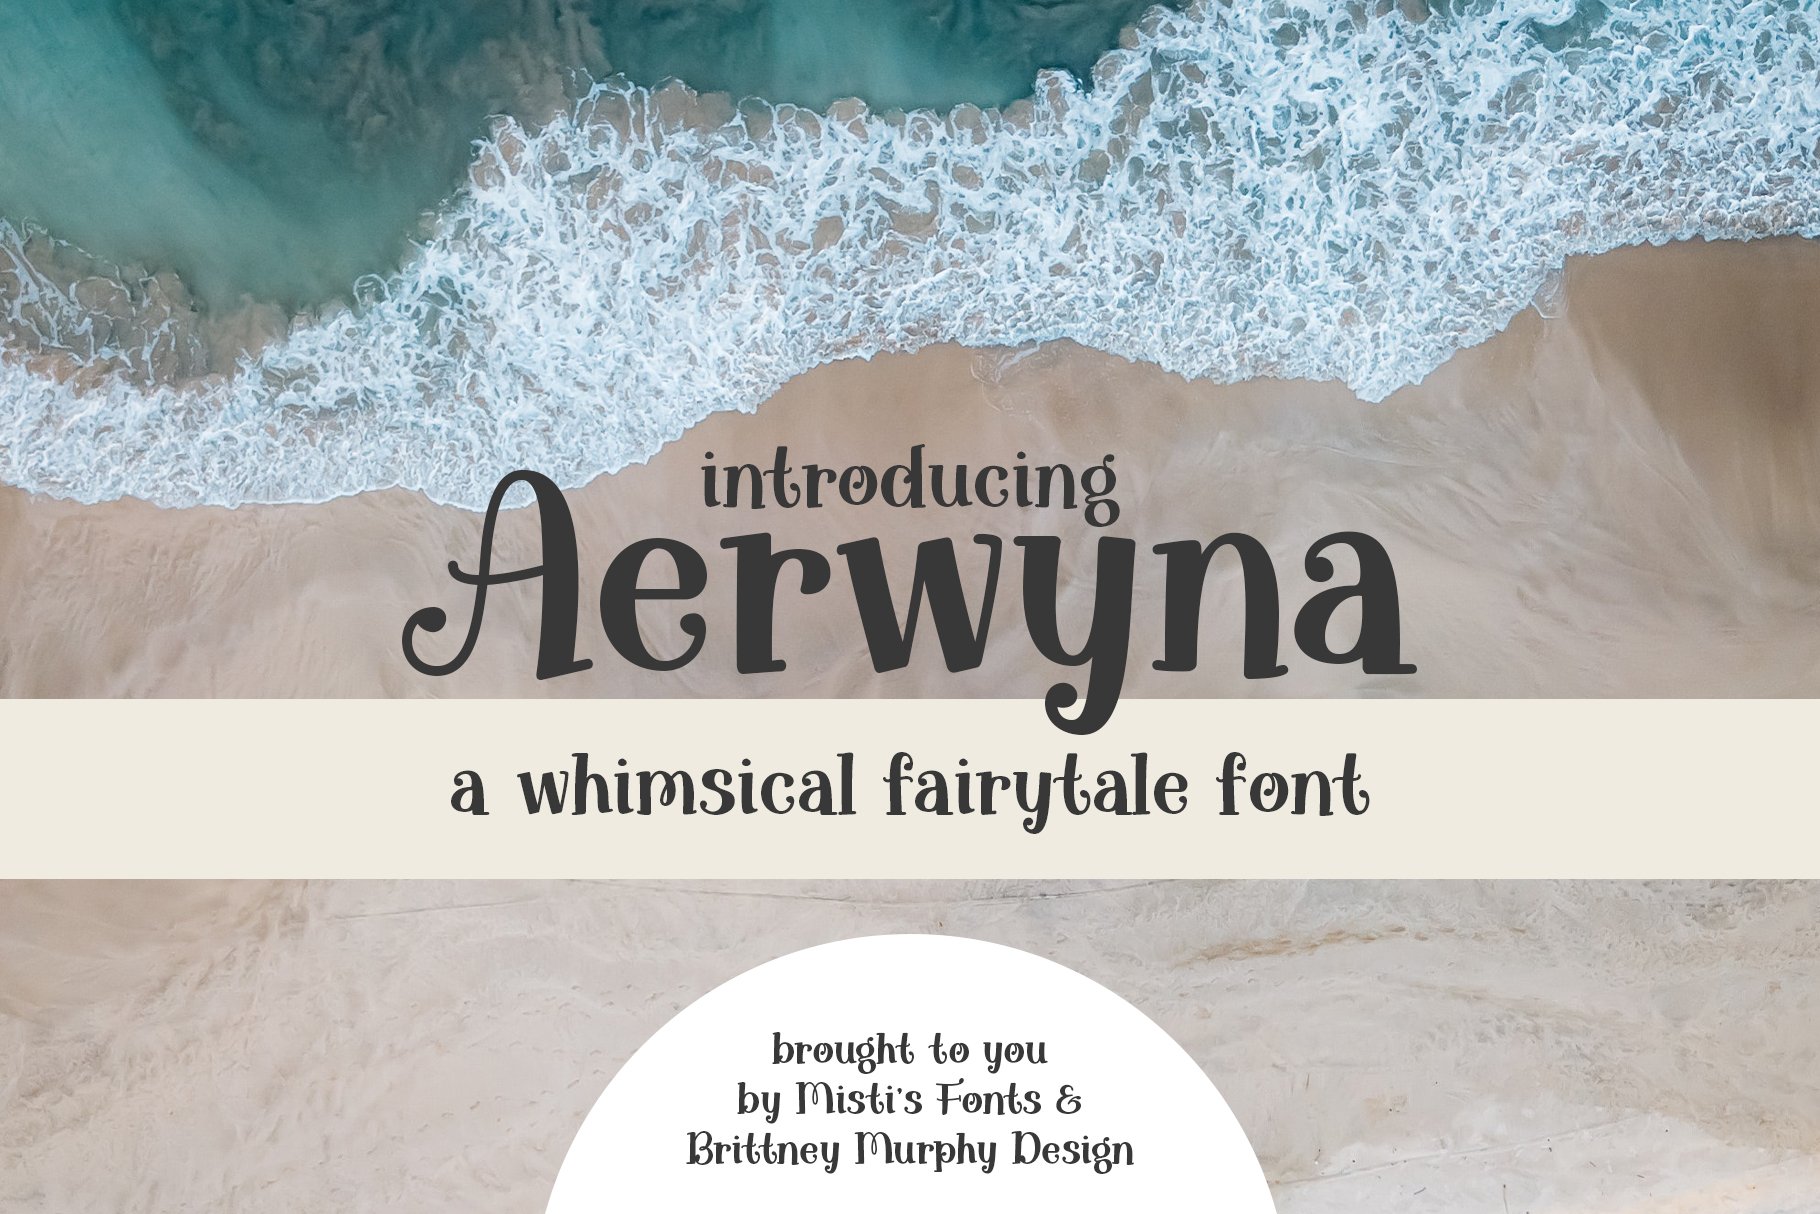 aerwyna regular title 604